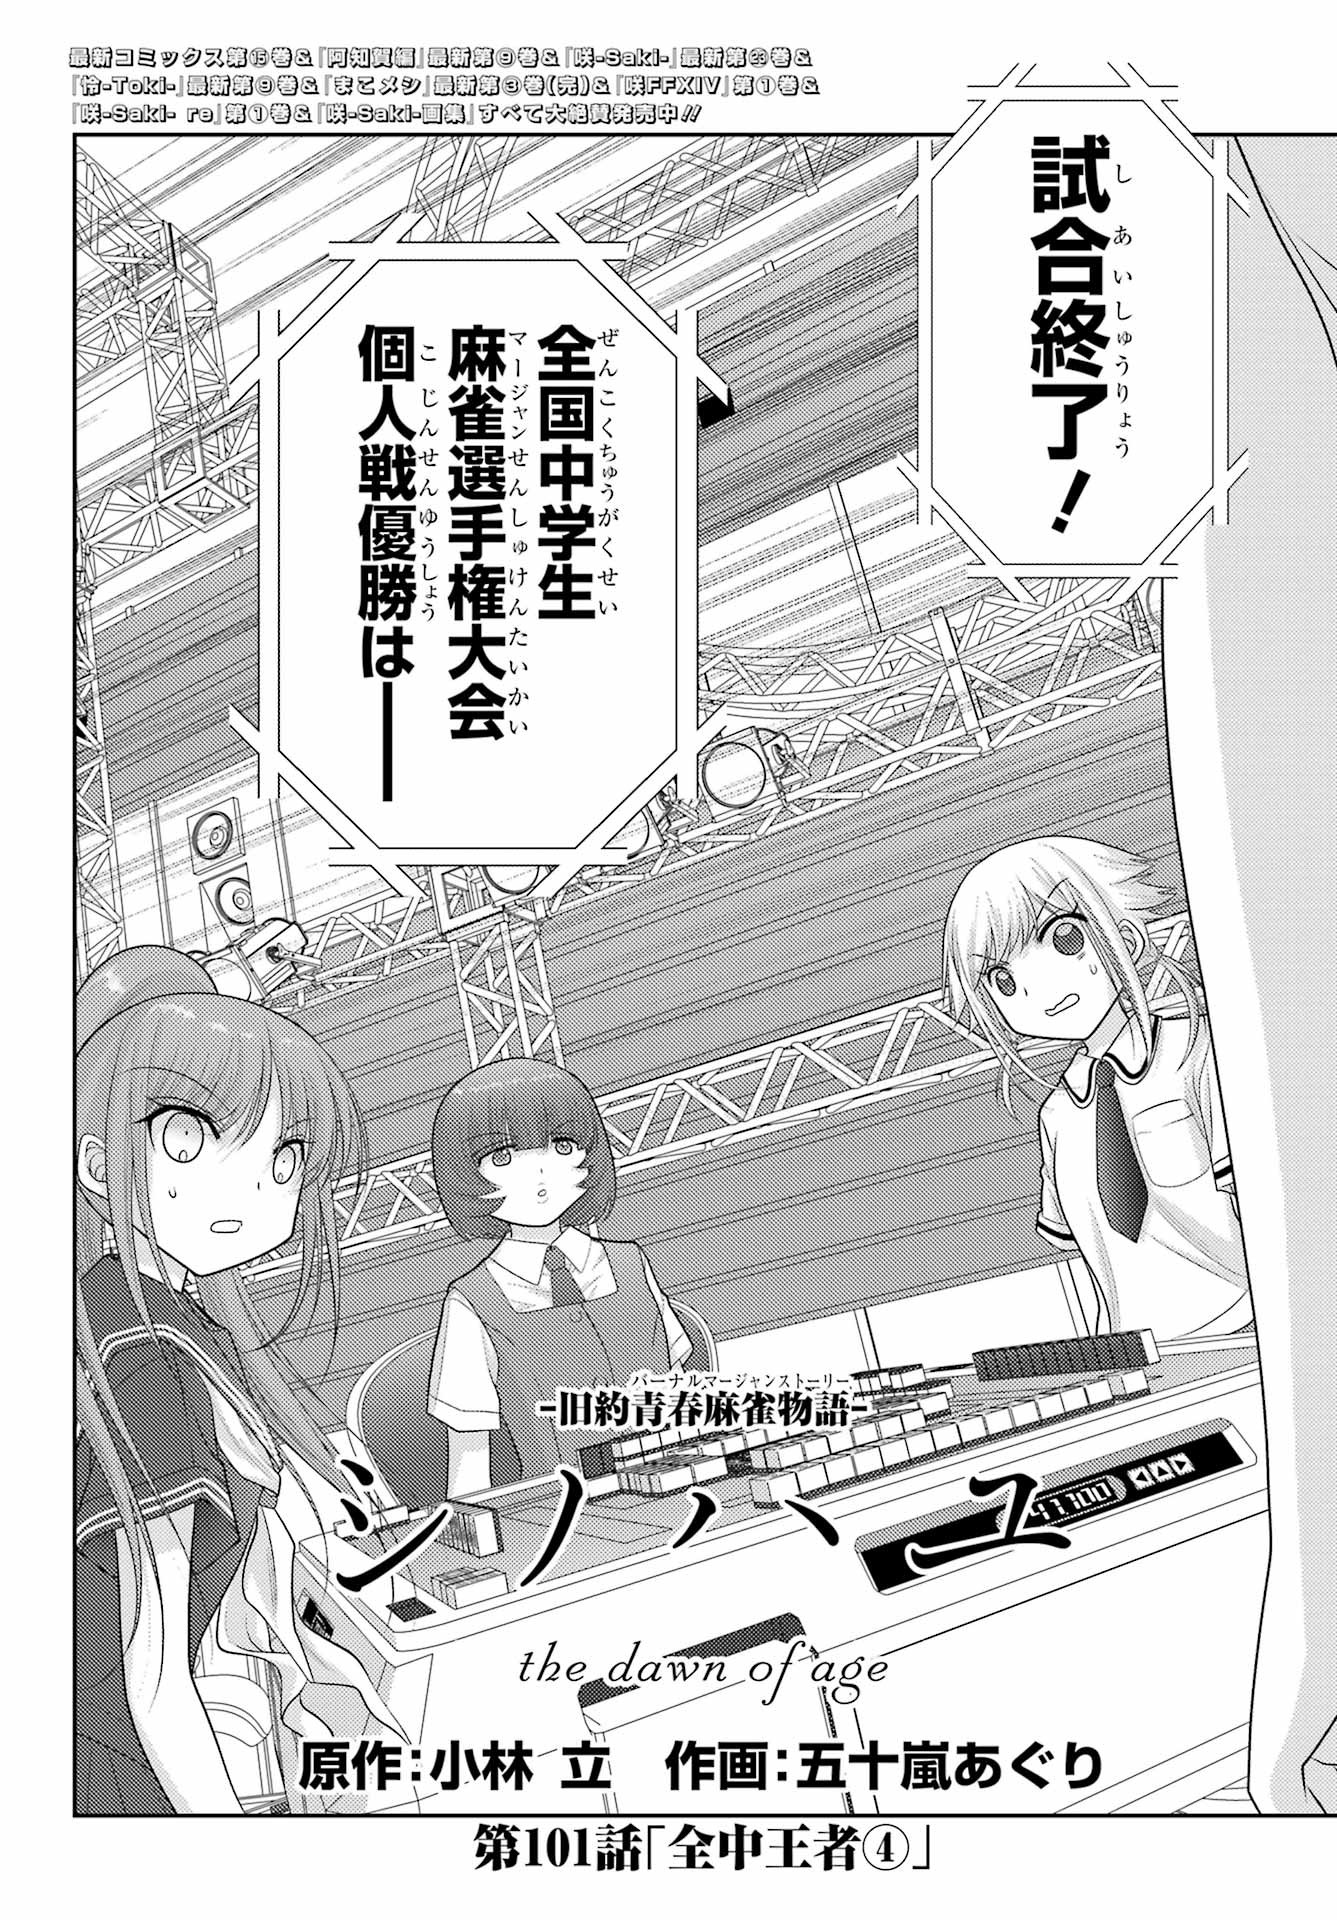 Shinohayu - The Dawn of Age Manga - Chapter 101 - Page 2